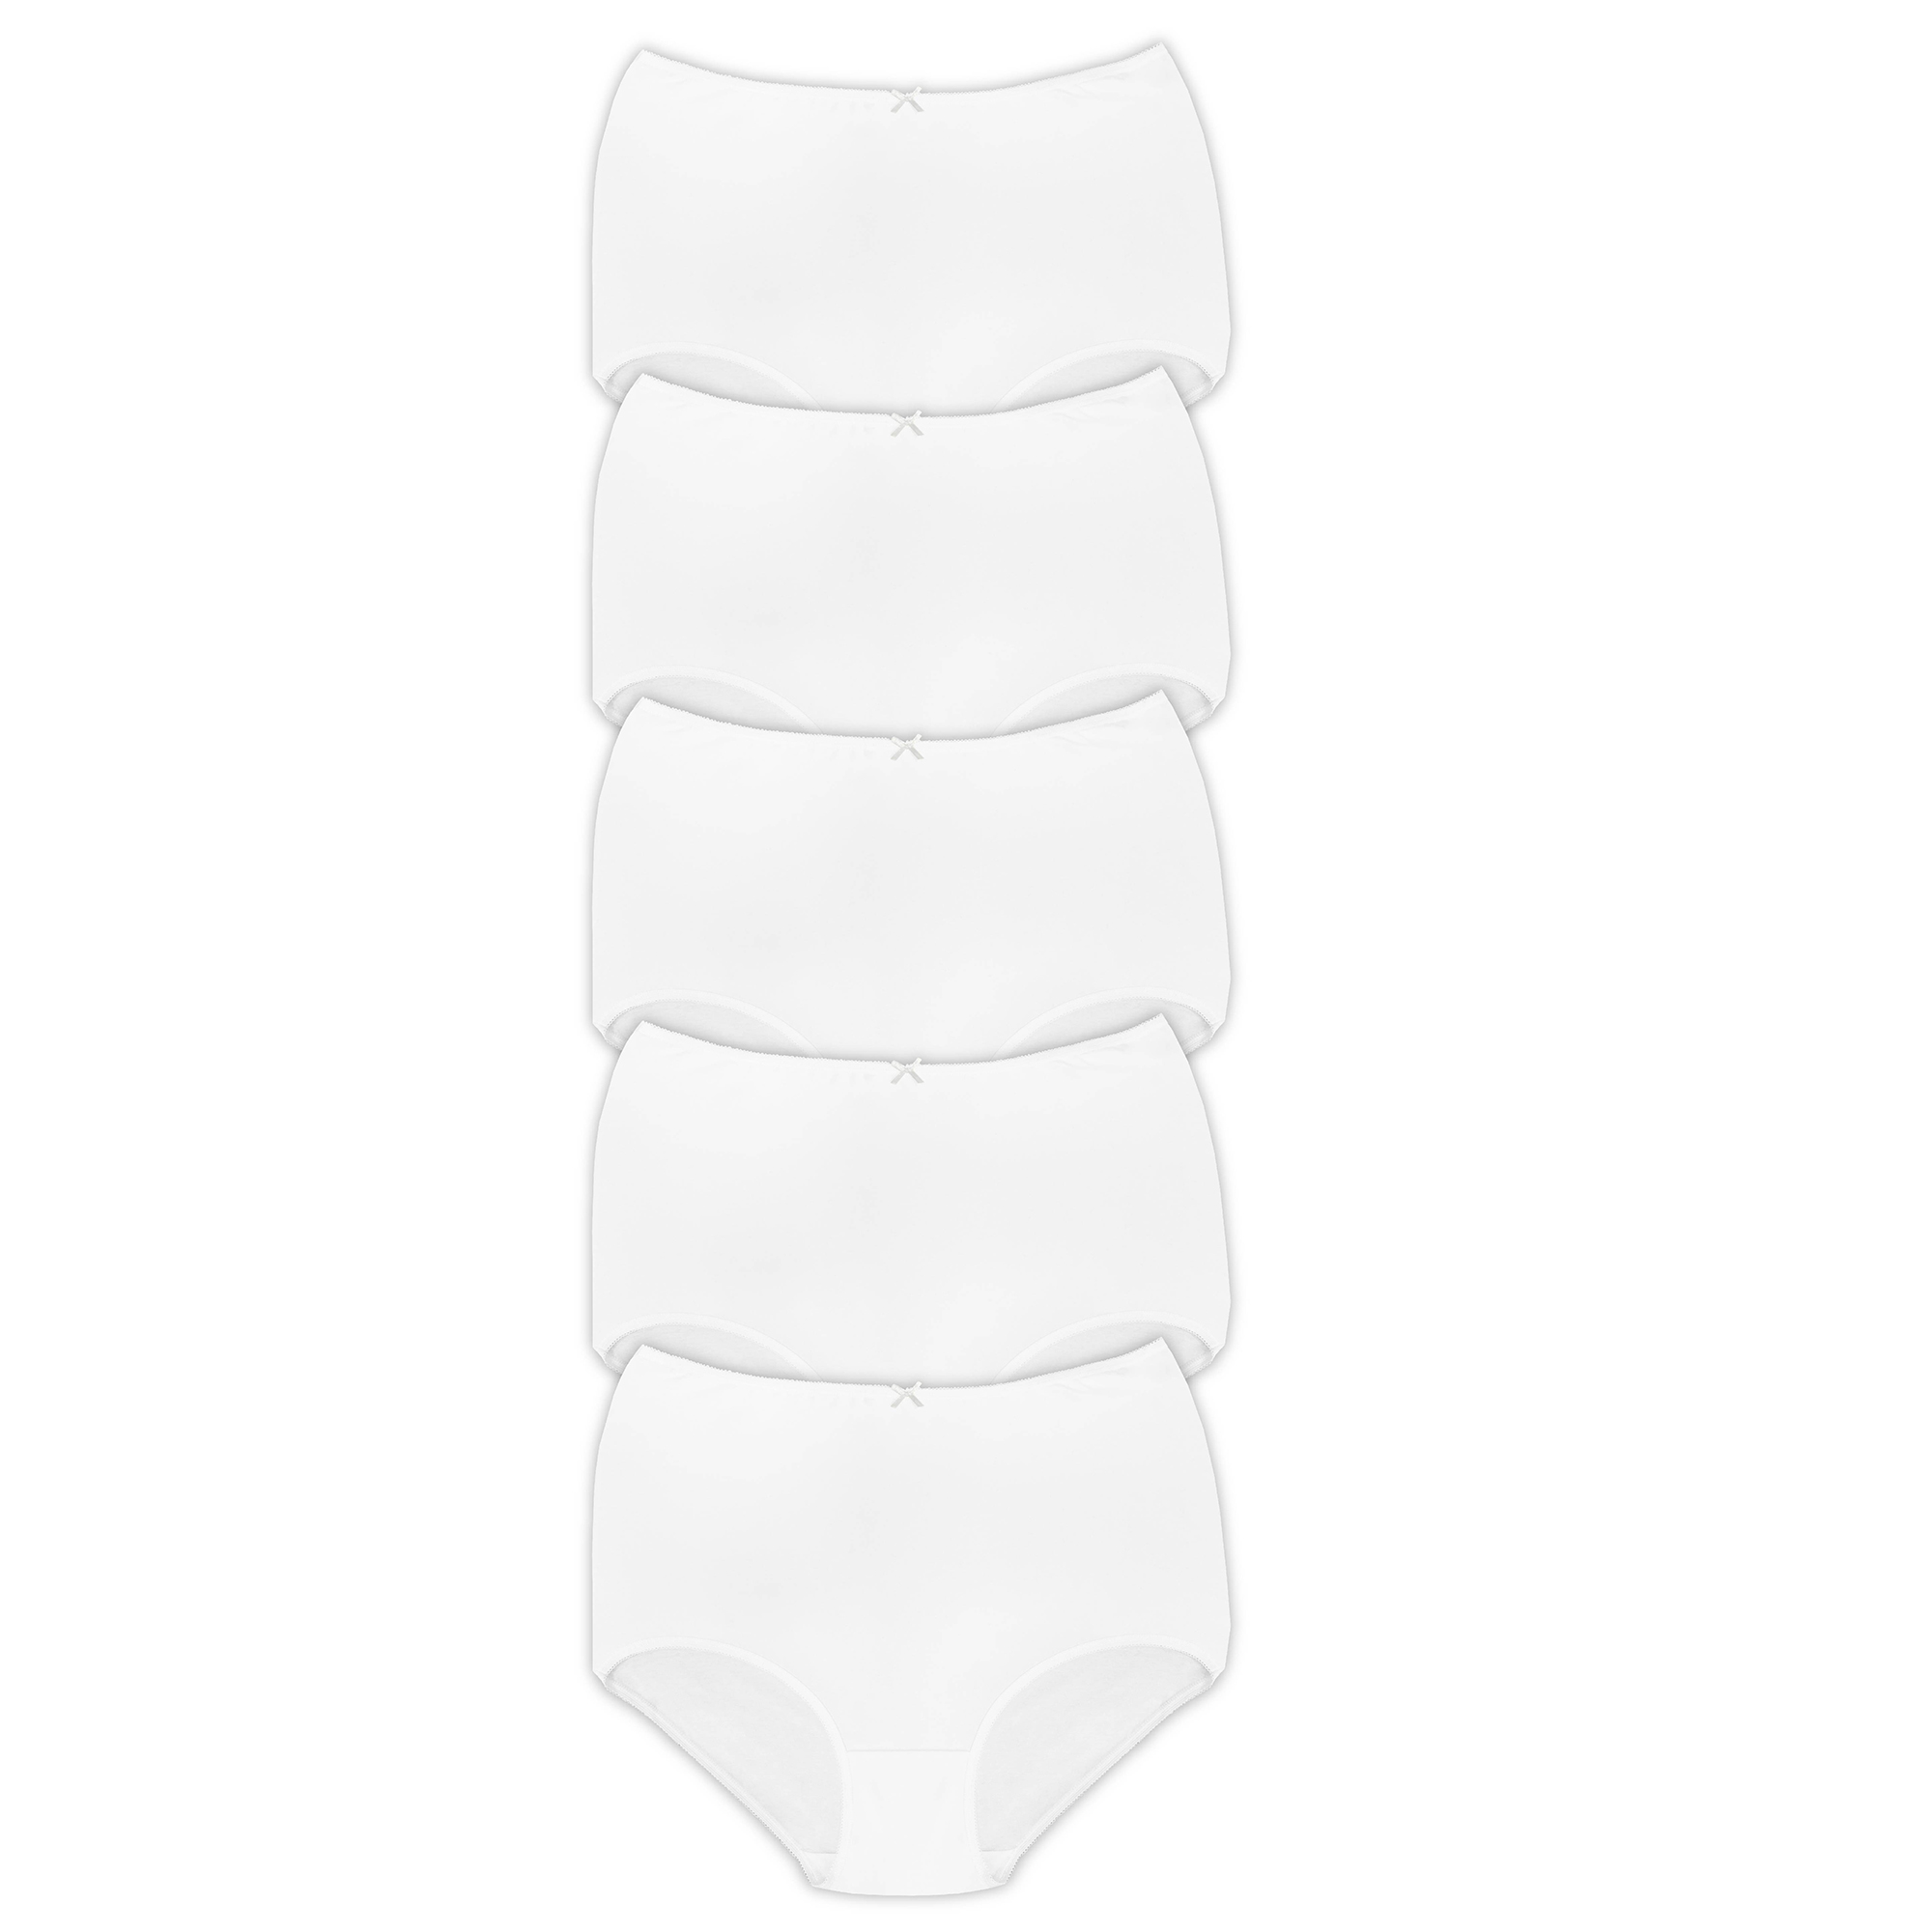 Wholesale Underwear, Wholesale Briefs, Ladies Plain Briefs 5 Pack  White/Black, A&K Hosiery